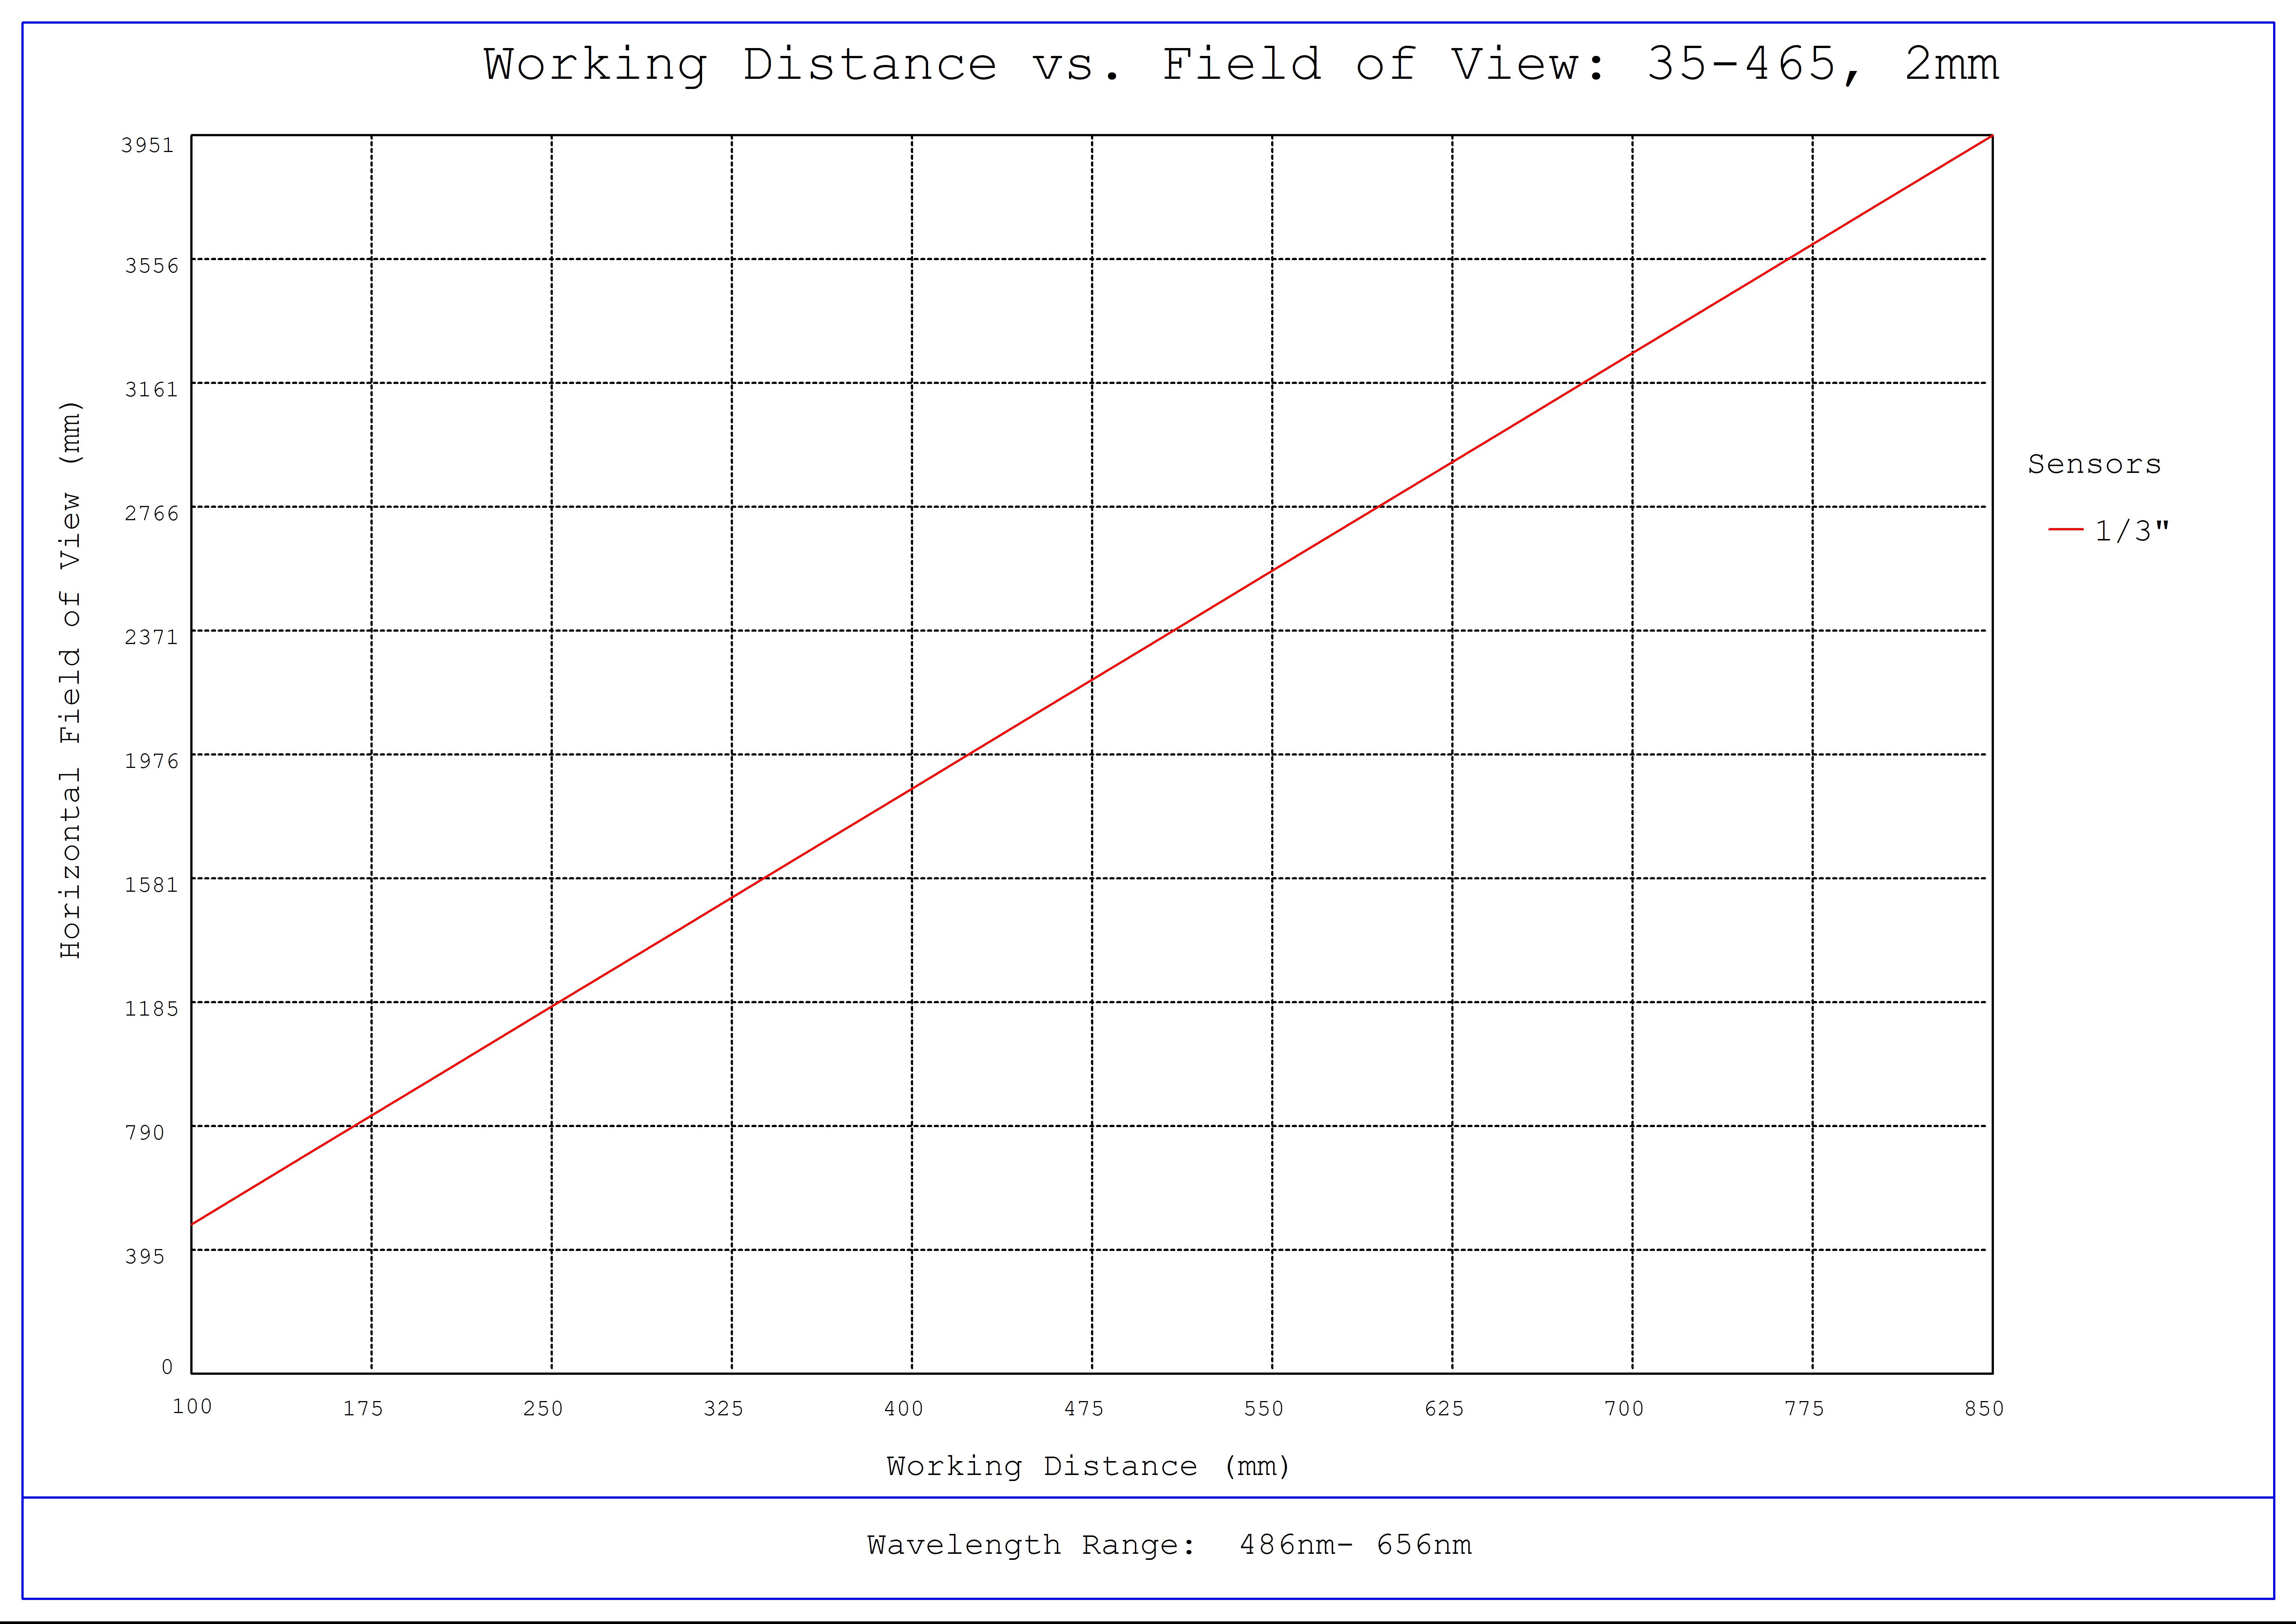 #35-465, 2mm FL f/2.5 IR-Cut, Blue Series M12 Lens, Working Distance versus Field of View Plot